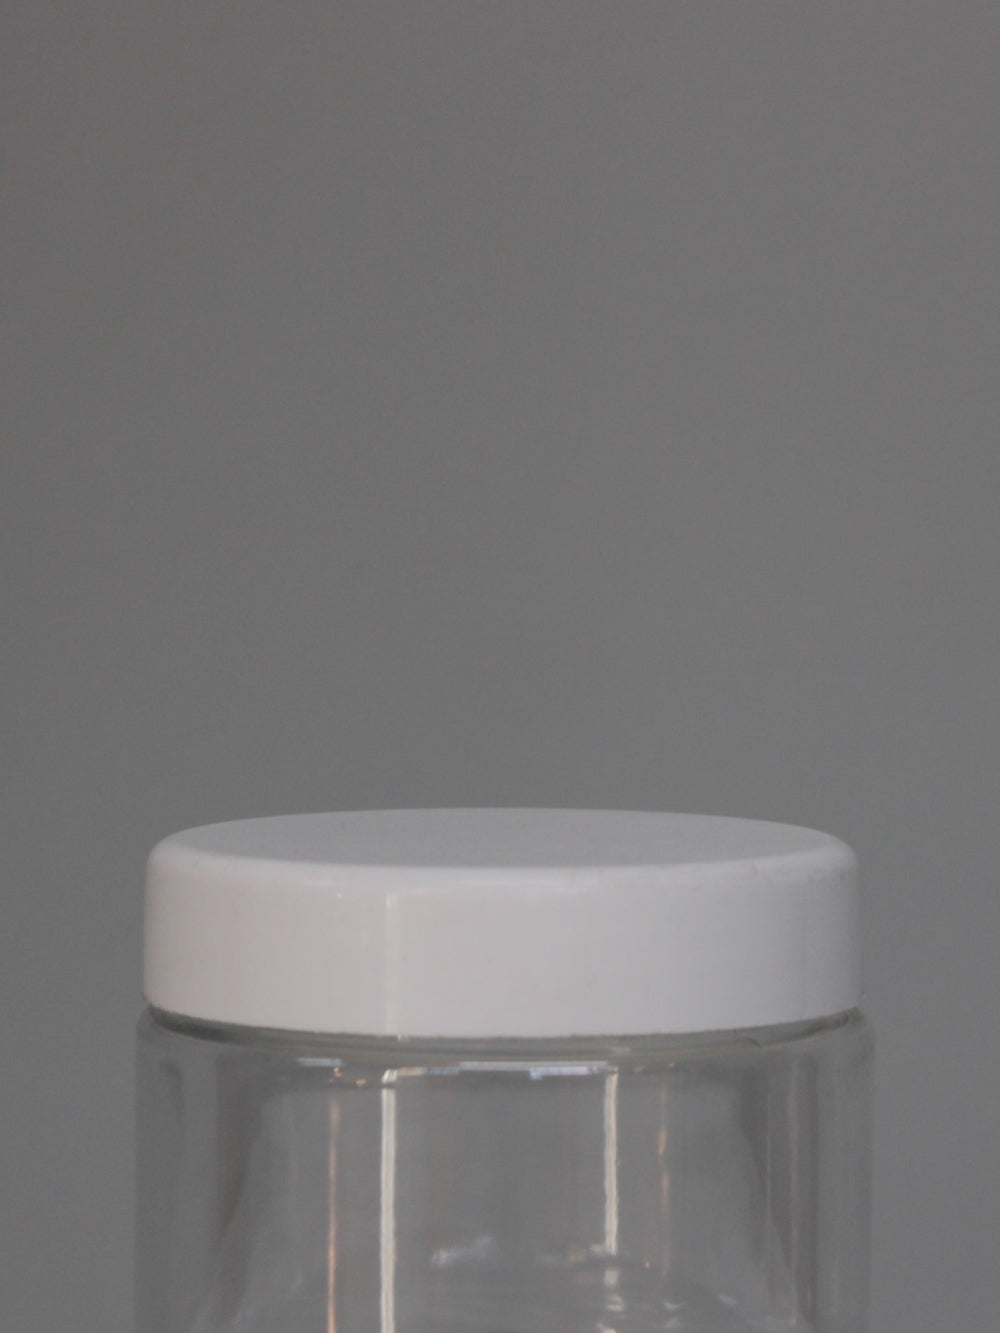 350ml Crystal PET Jar - (Pack of 100 units)